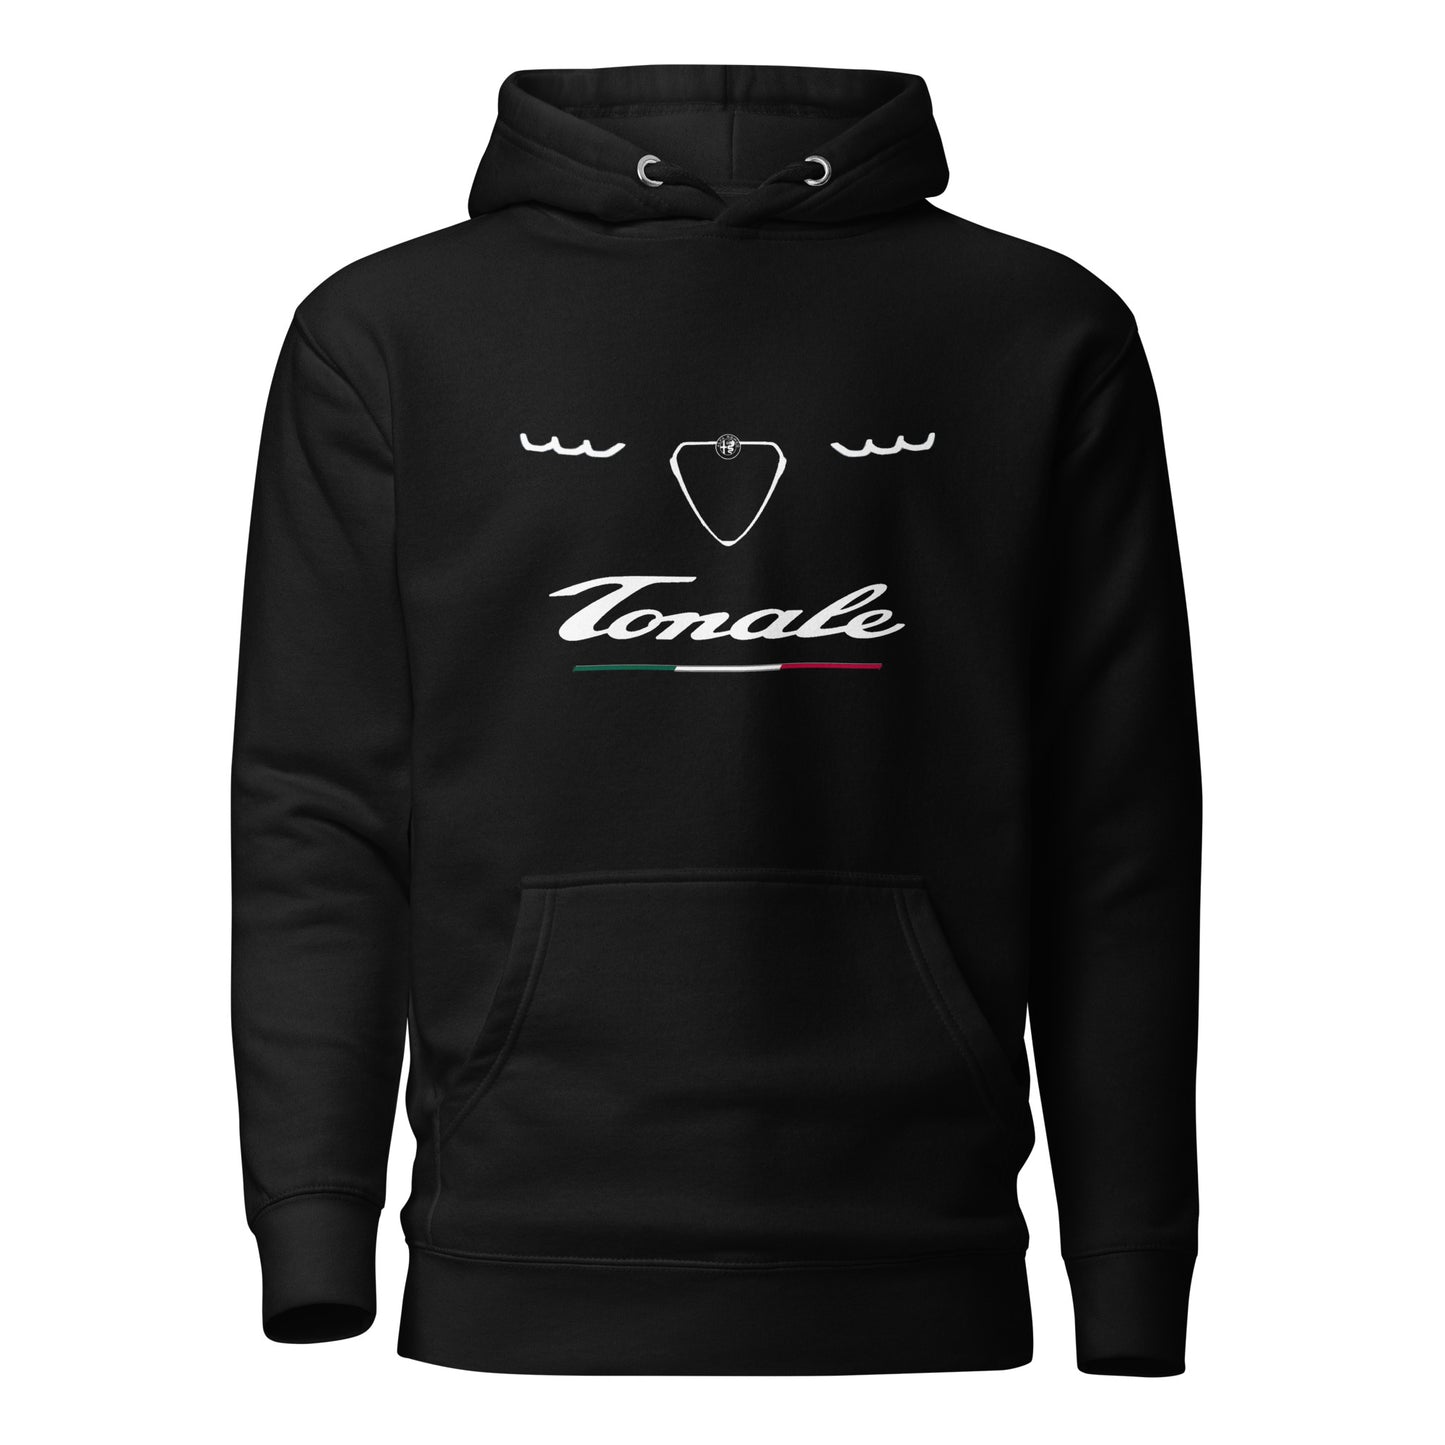 Alfa Romeo Tonale front hooded sweatshirt